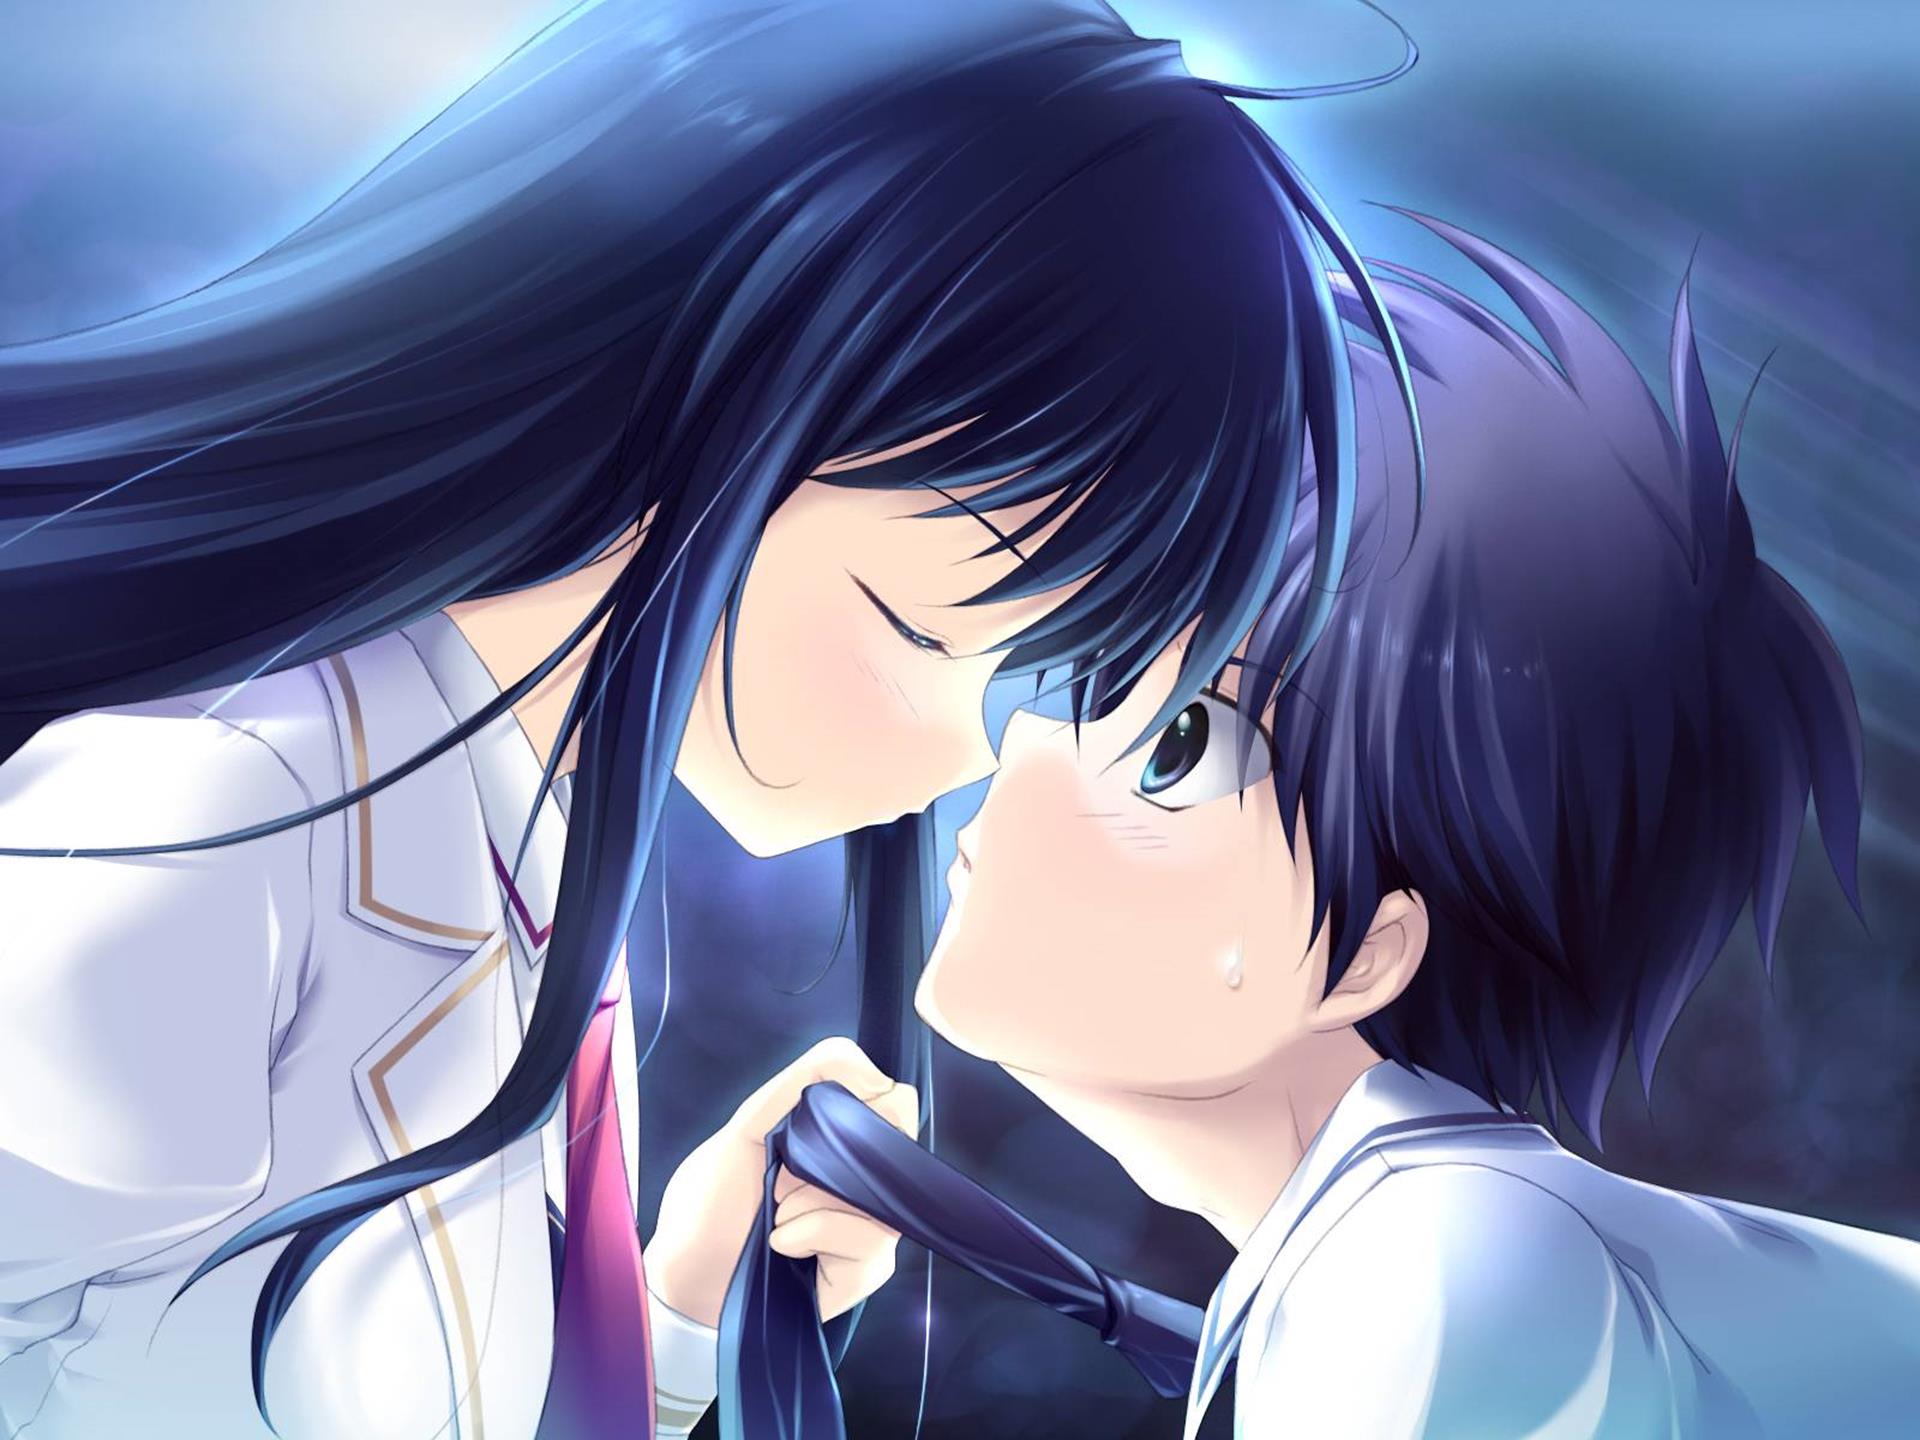 Man kissing girl anime character Anime Love Romance Kiss Cartoon Kissing  Couple love cg Artwork png  PNGEgg